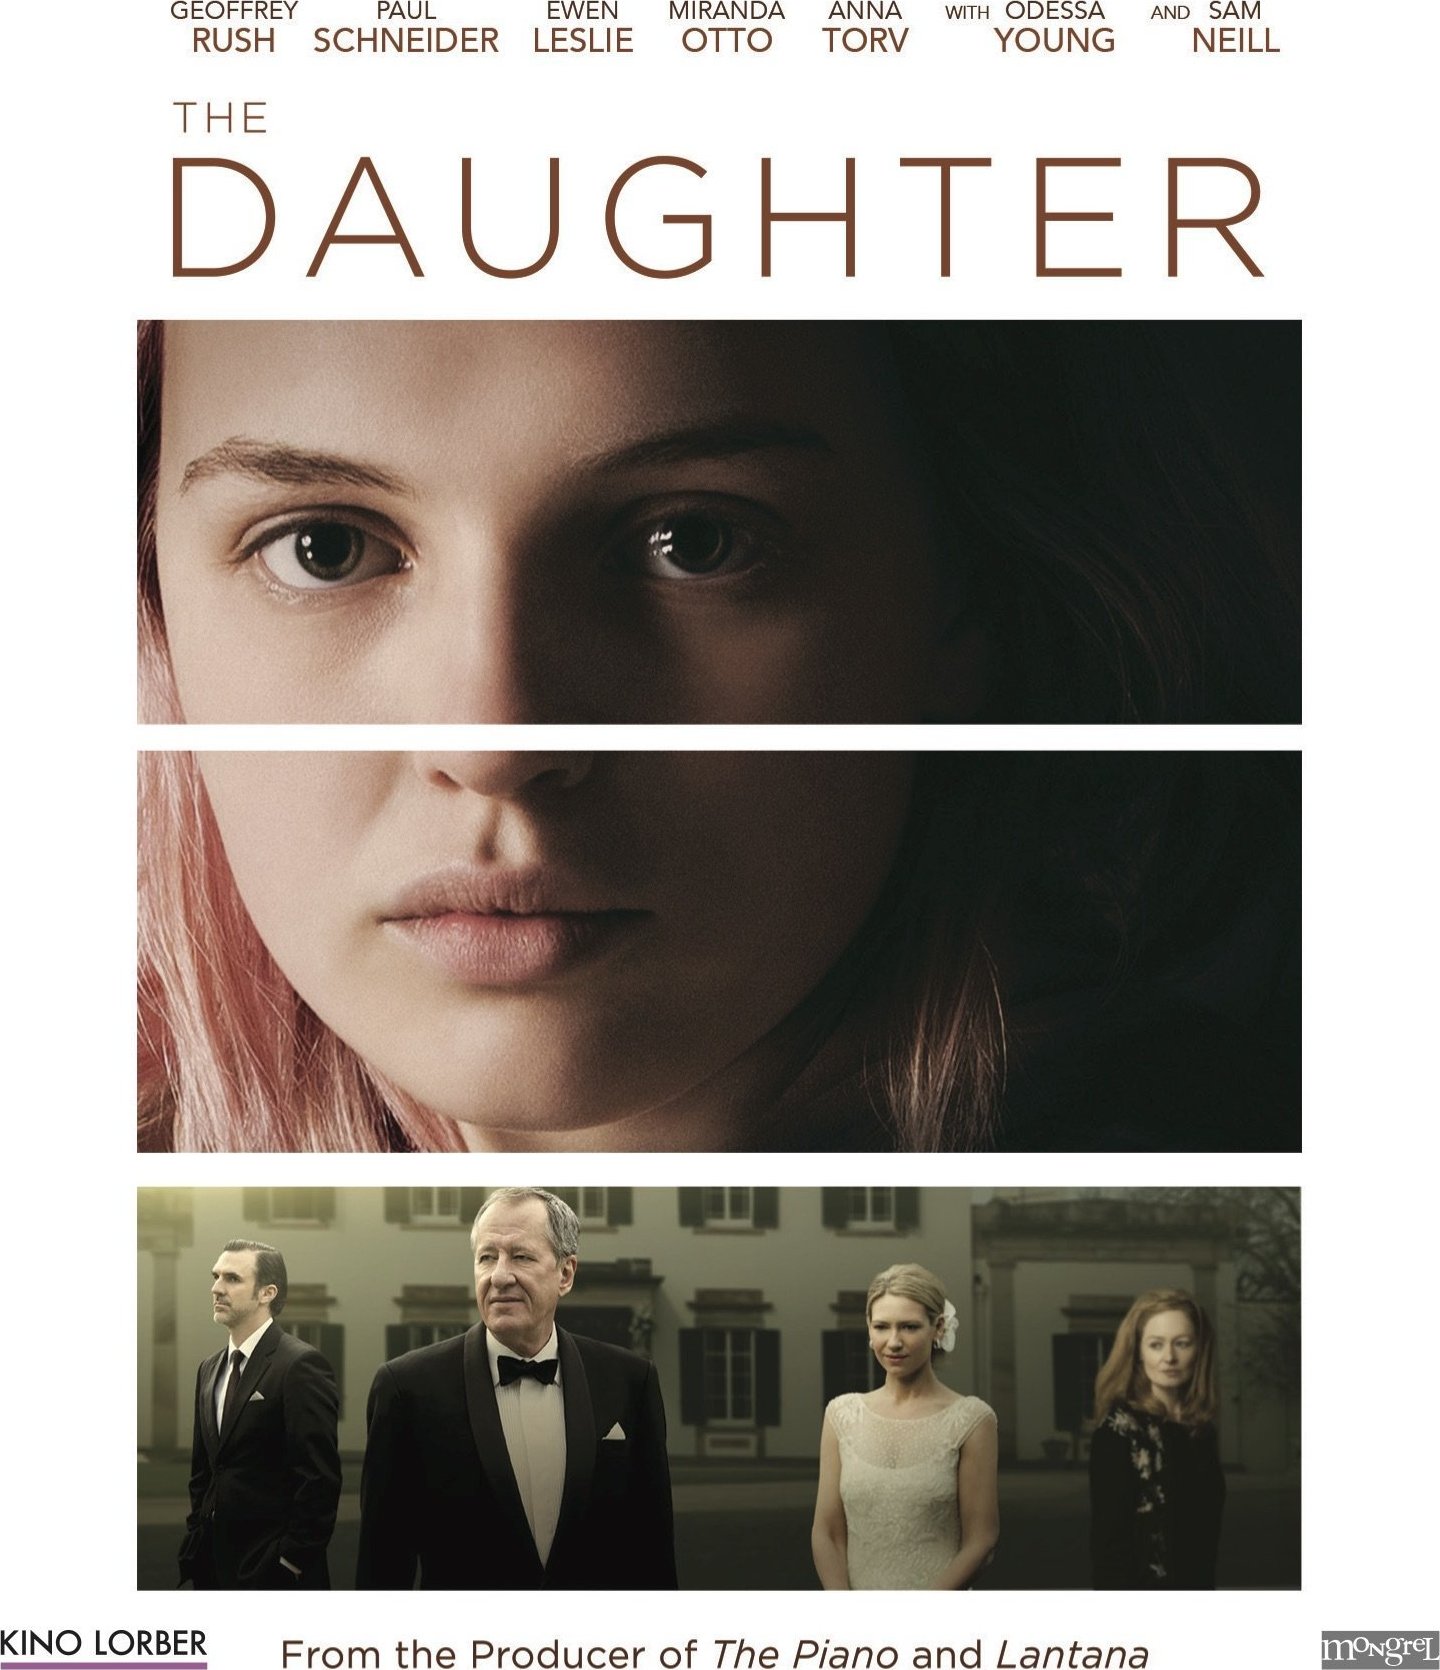 The new daughter. DVD дочь. Отто Раш. The New daughter 2009. The daughter deal.